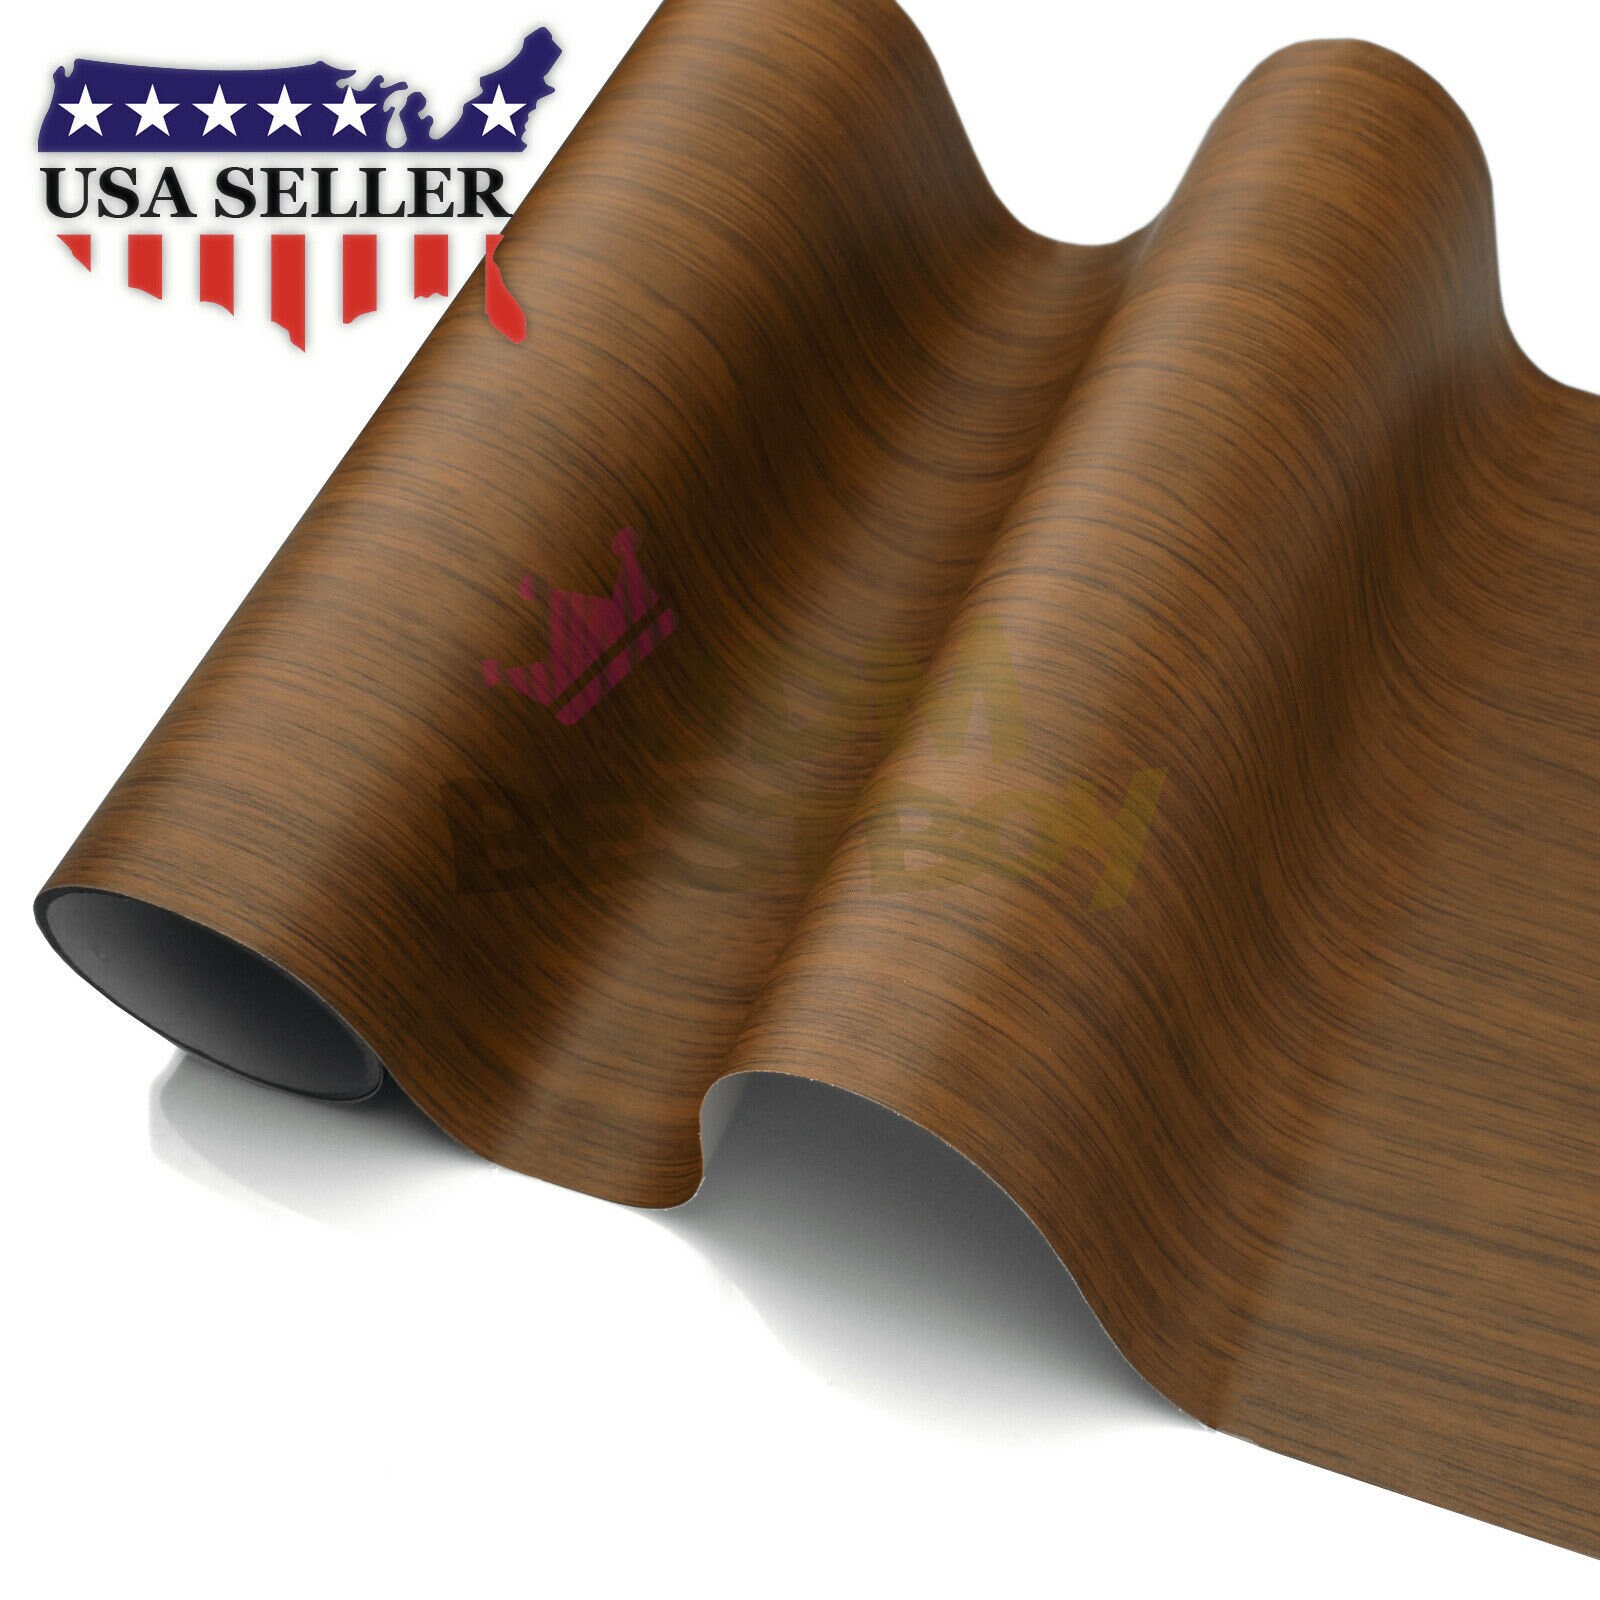 Oak wood grain vinyl 10ft x 4ft DI-Y car furniture wrap 3MIL film RHINOC decal 